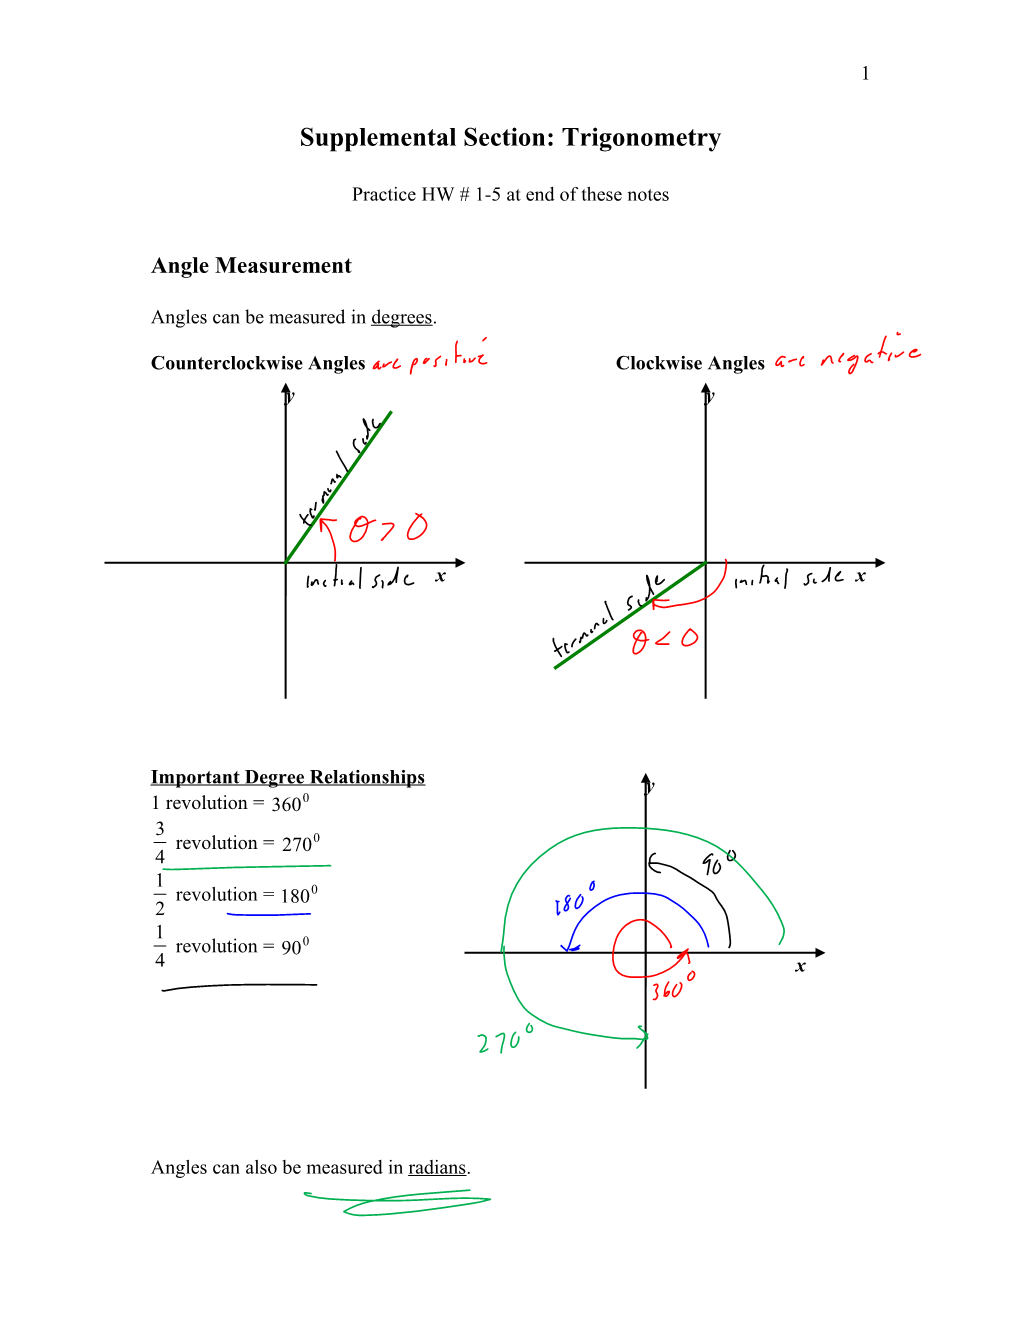 Supplemental Section: Trigonometry